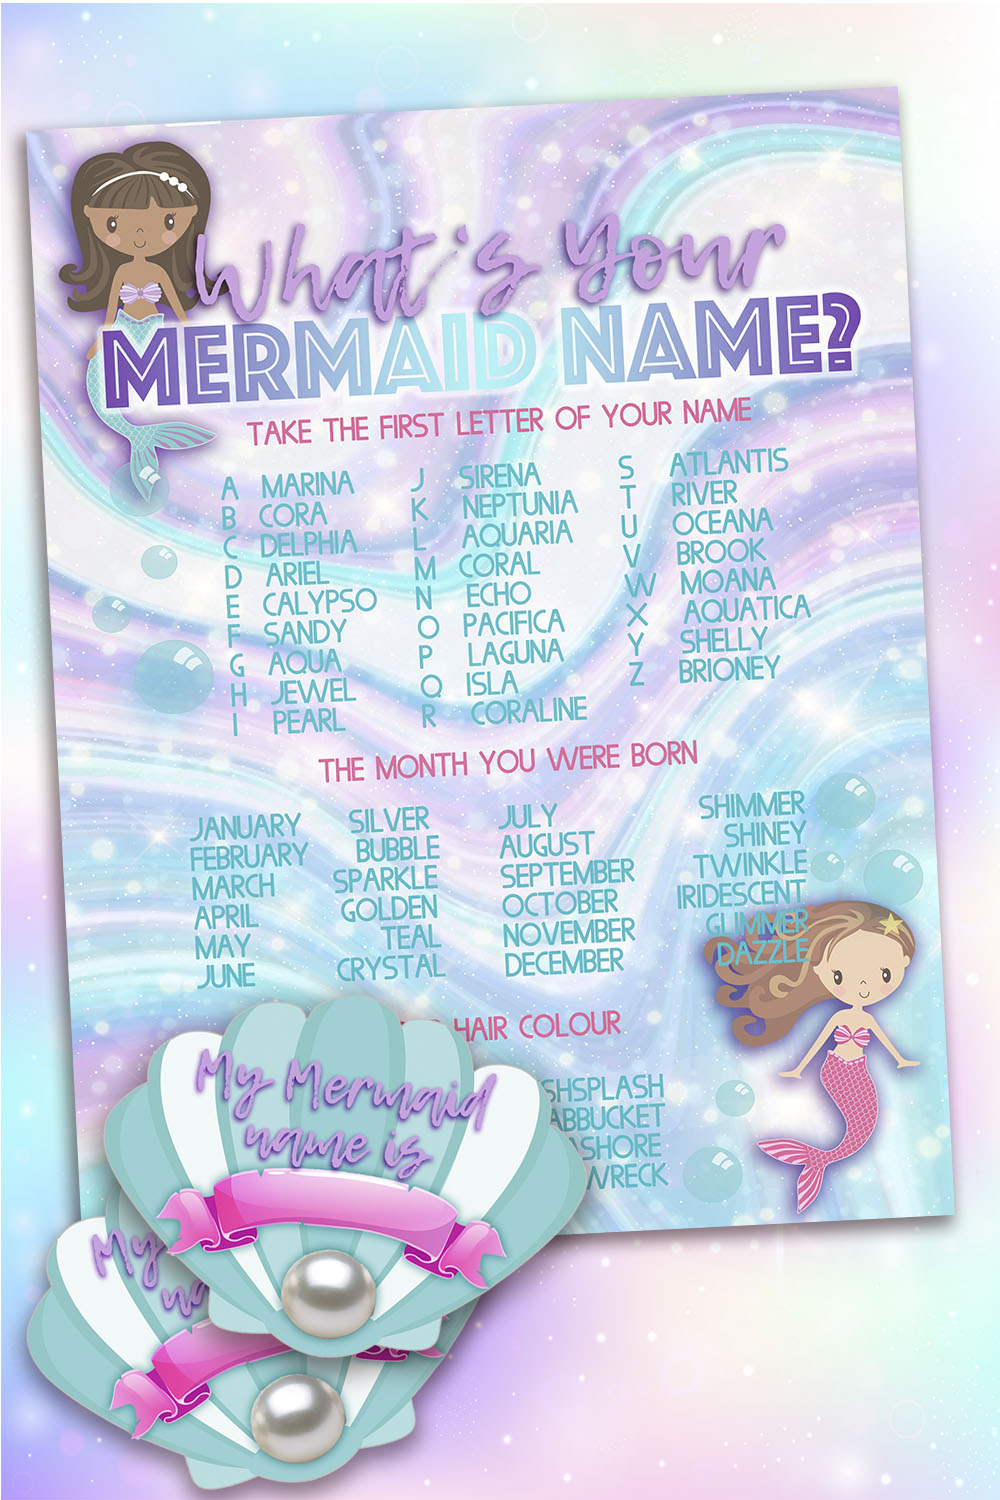 Whats your mermaid name?